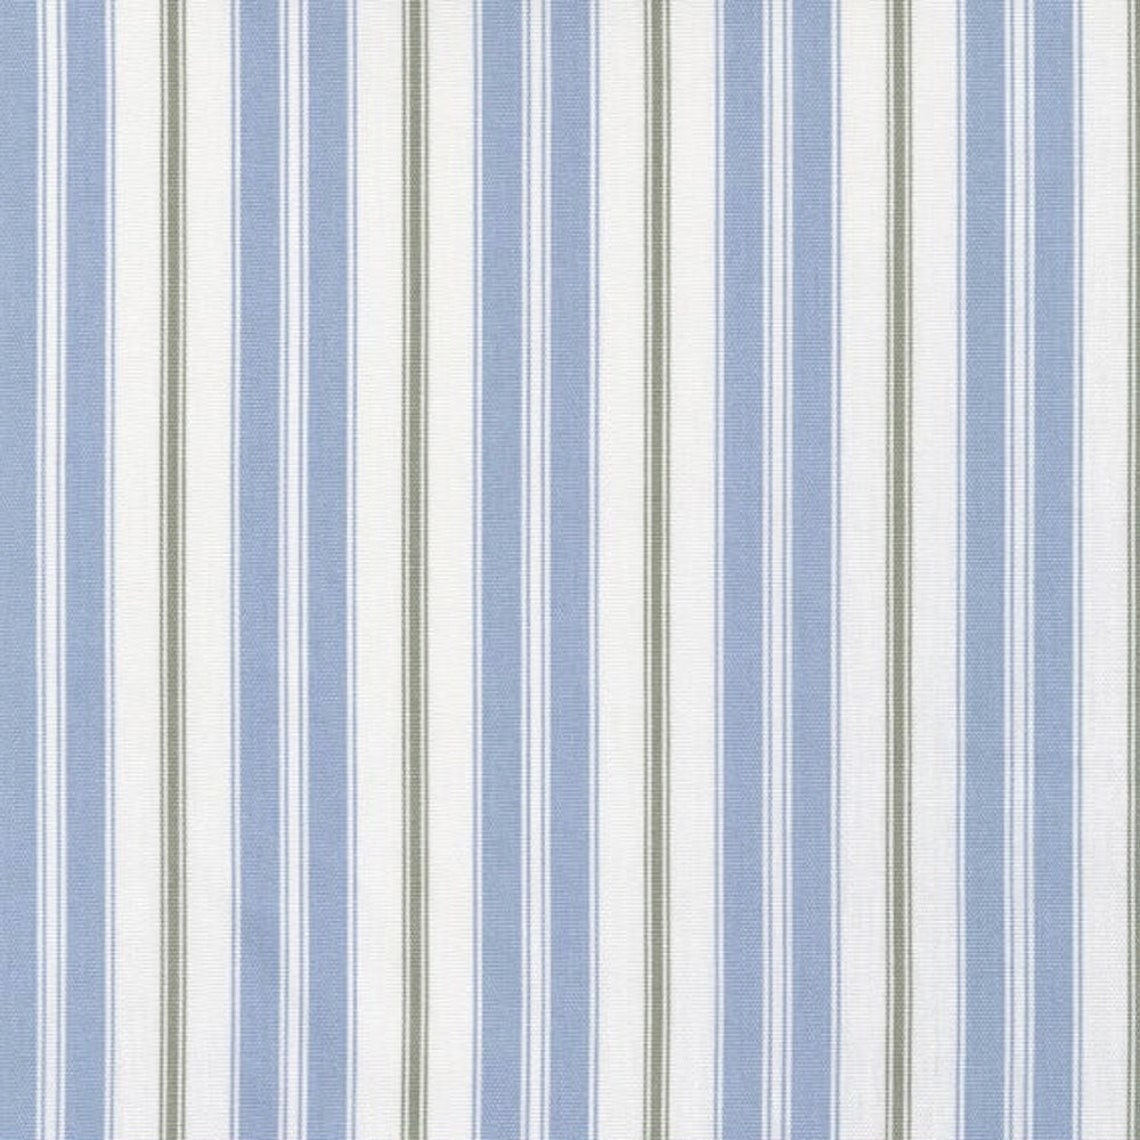 Stripe Newbury Round Green, Blue Blue, White Tablecloth Antique in